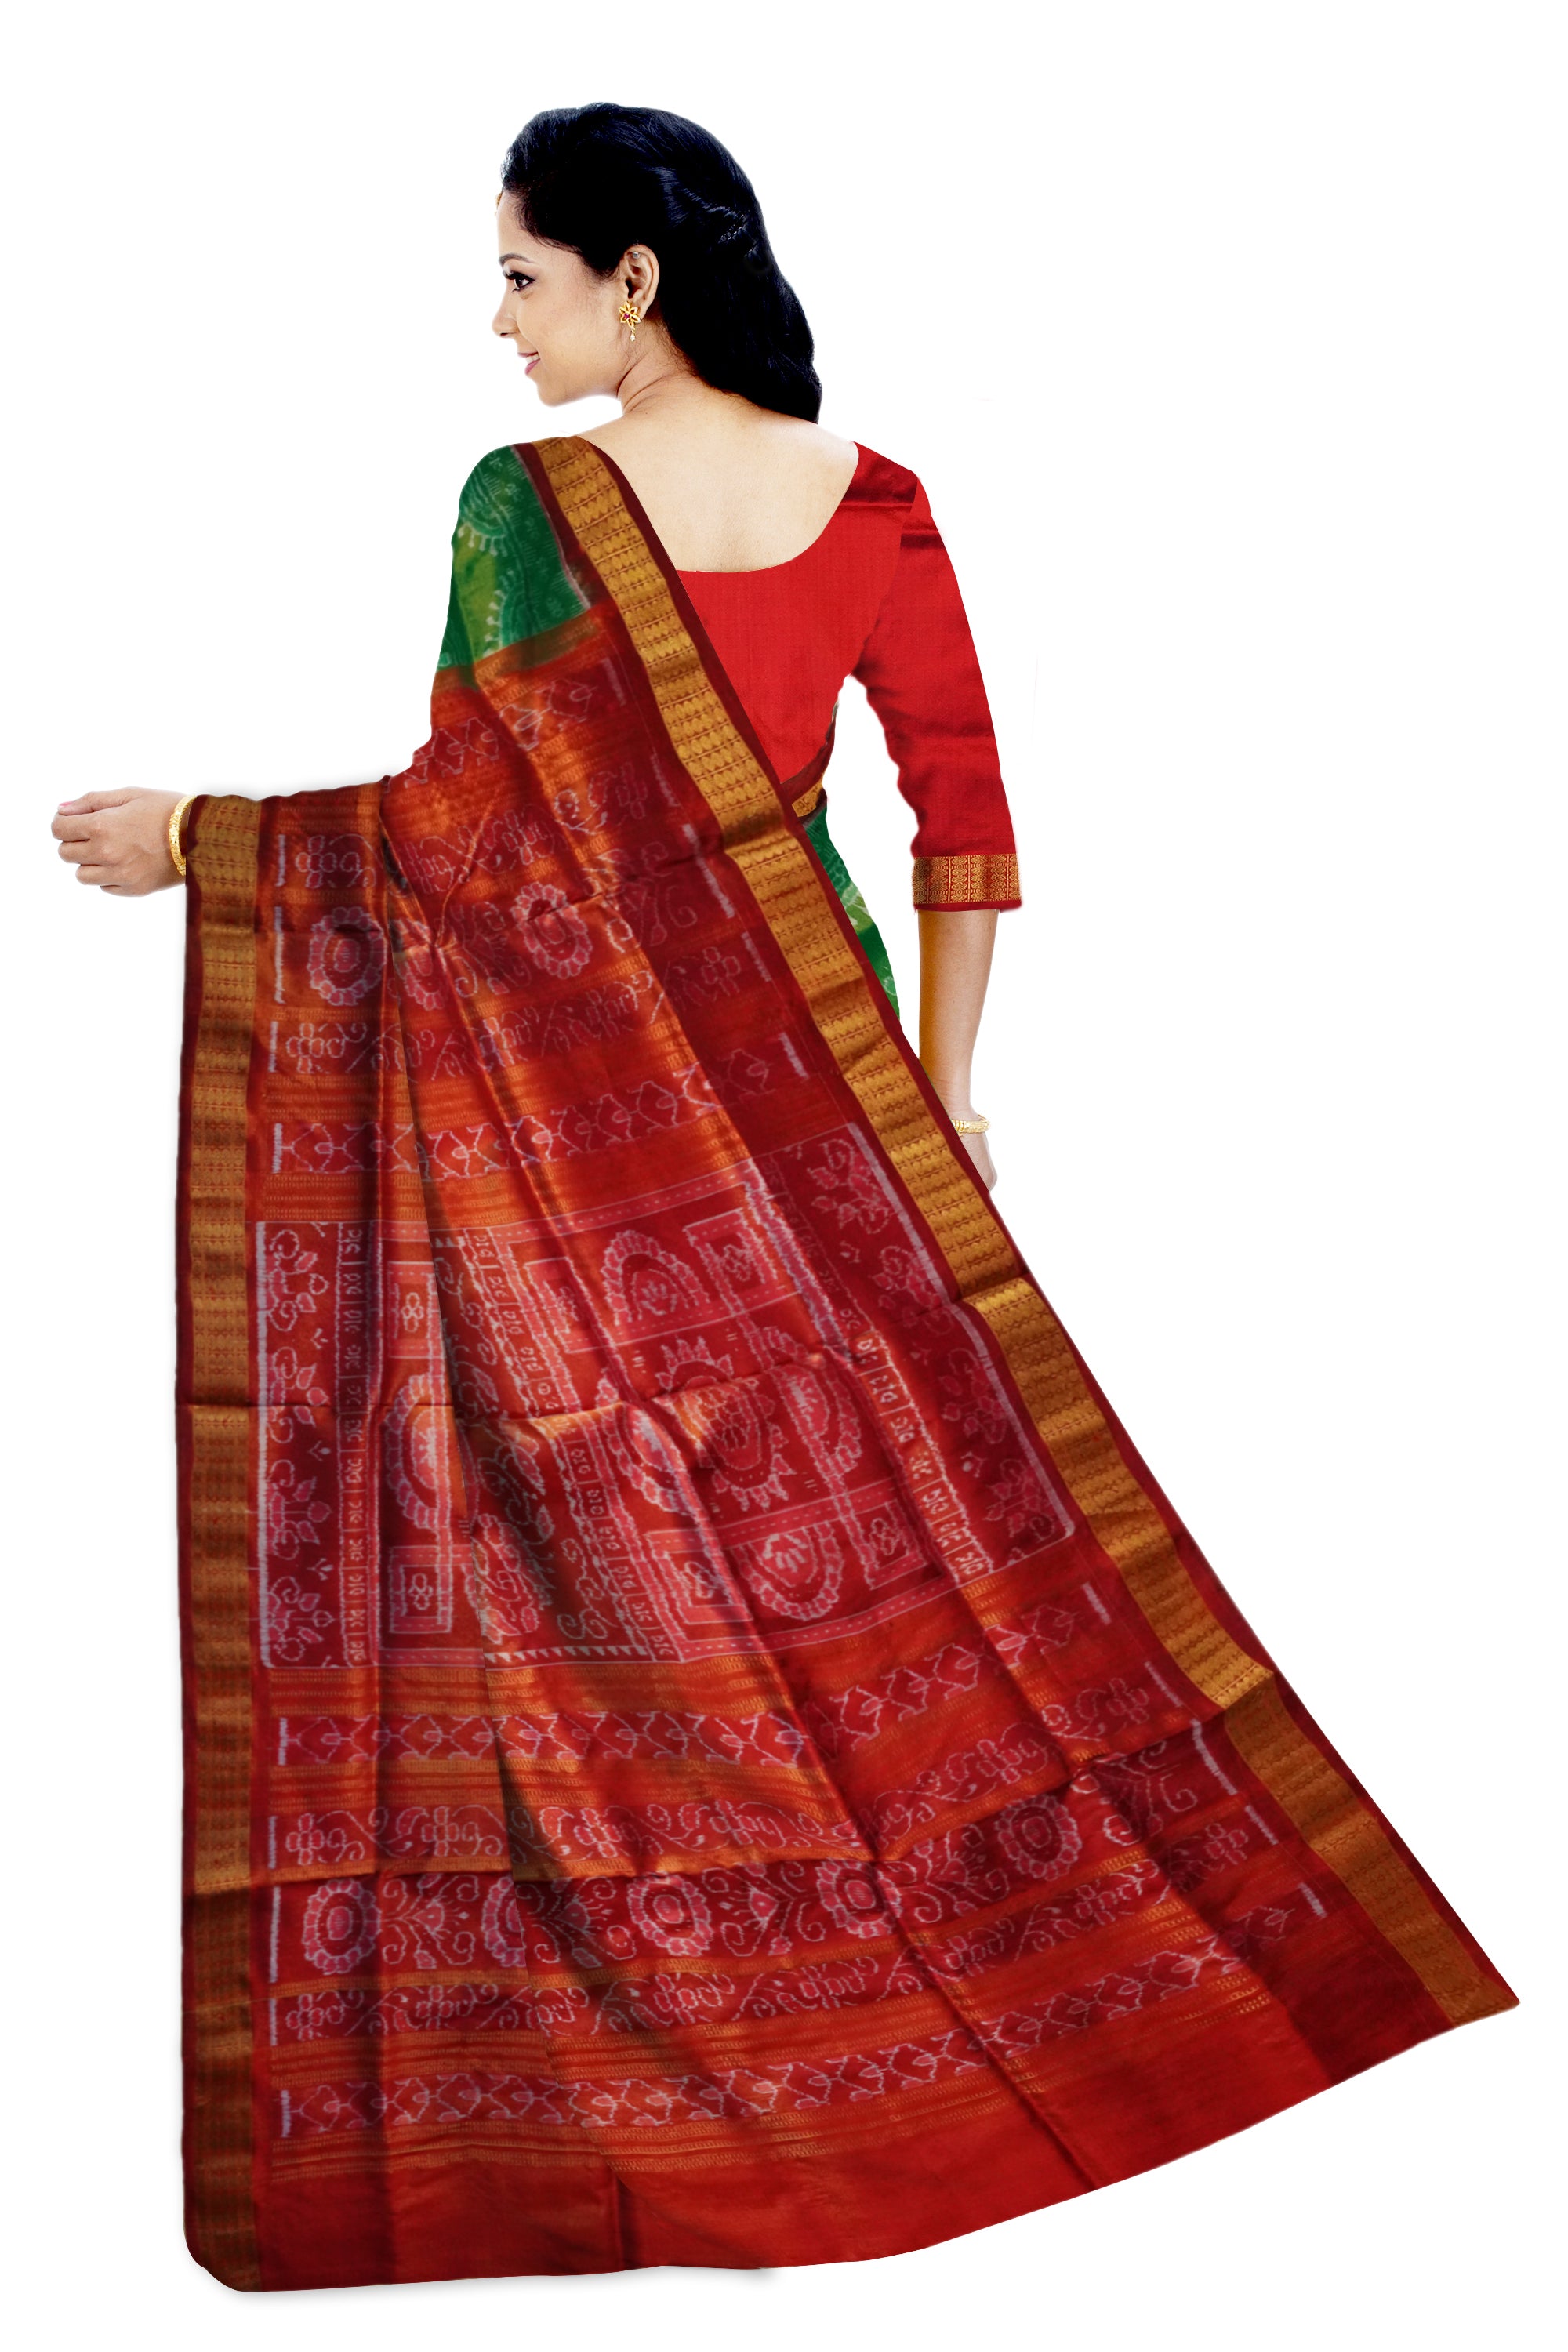 Green and Golden red color circular pattern Sambalpuri Tissue silk saree. - Koshali Arts & Crafts Enterprise